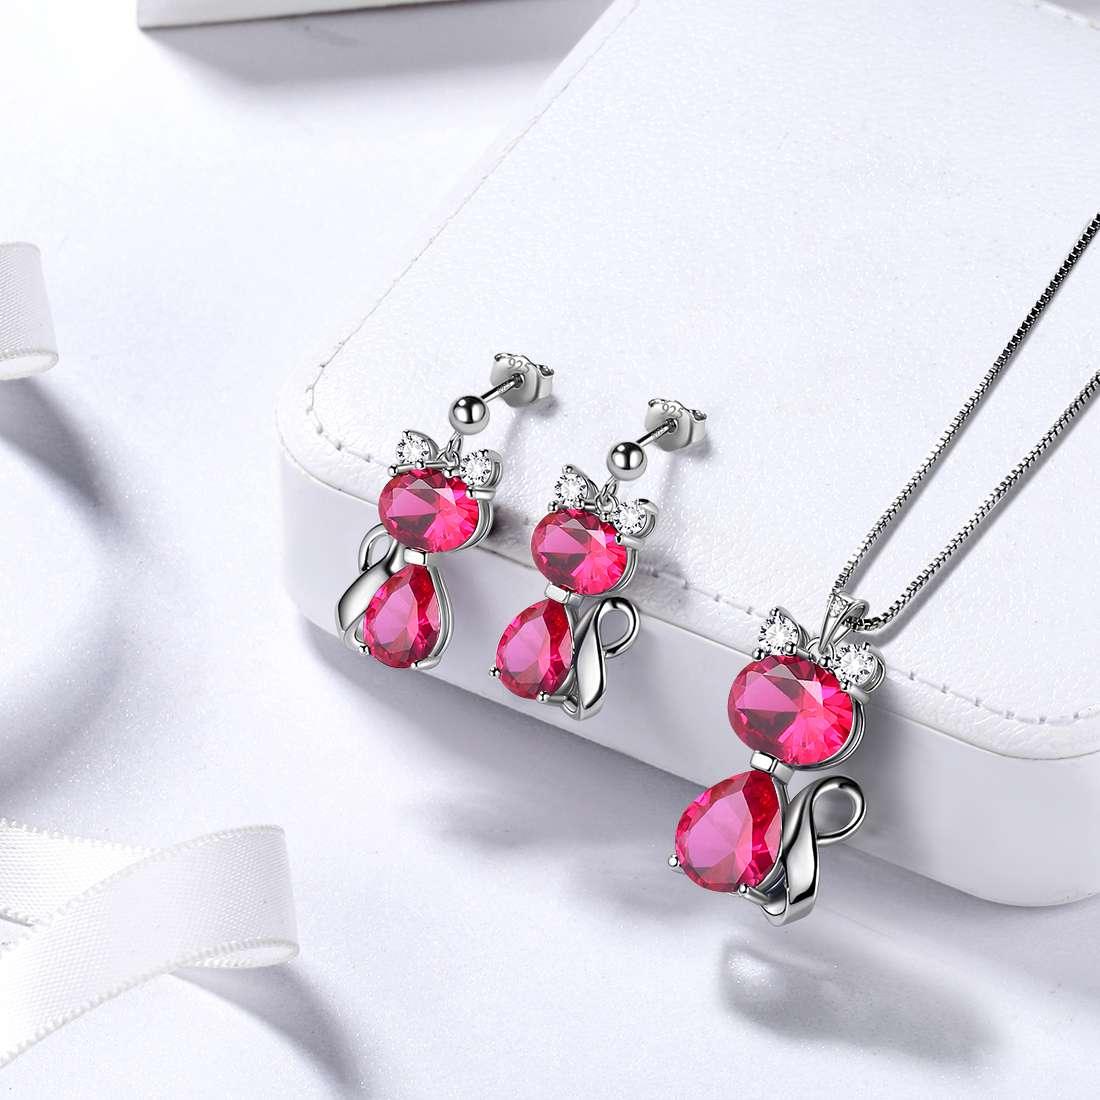 Cats Necklace Earrings Jewelry July Ruby Birthstone - Jewelry Set - Aurora Tears Jewelry